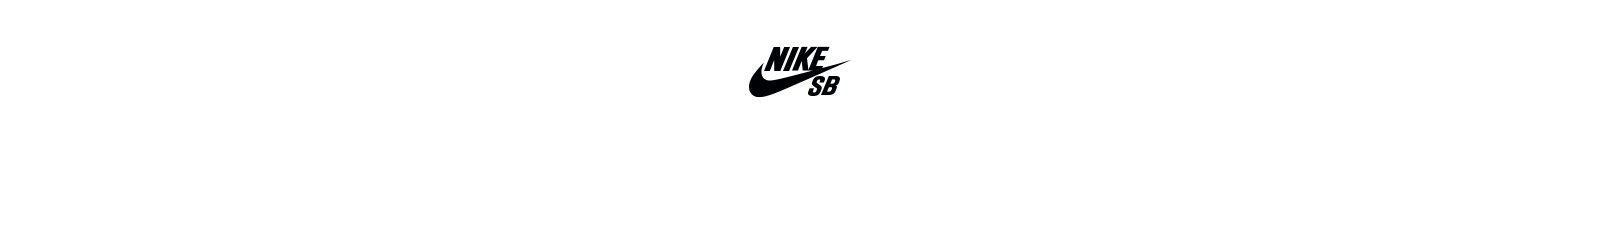 Pastel Nike Logo - LogoDix